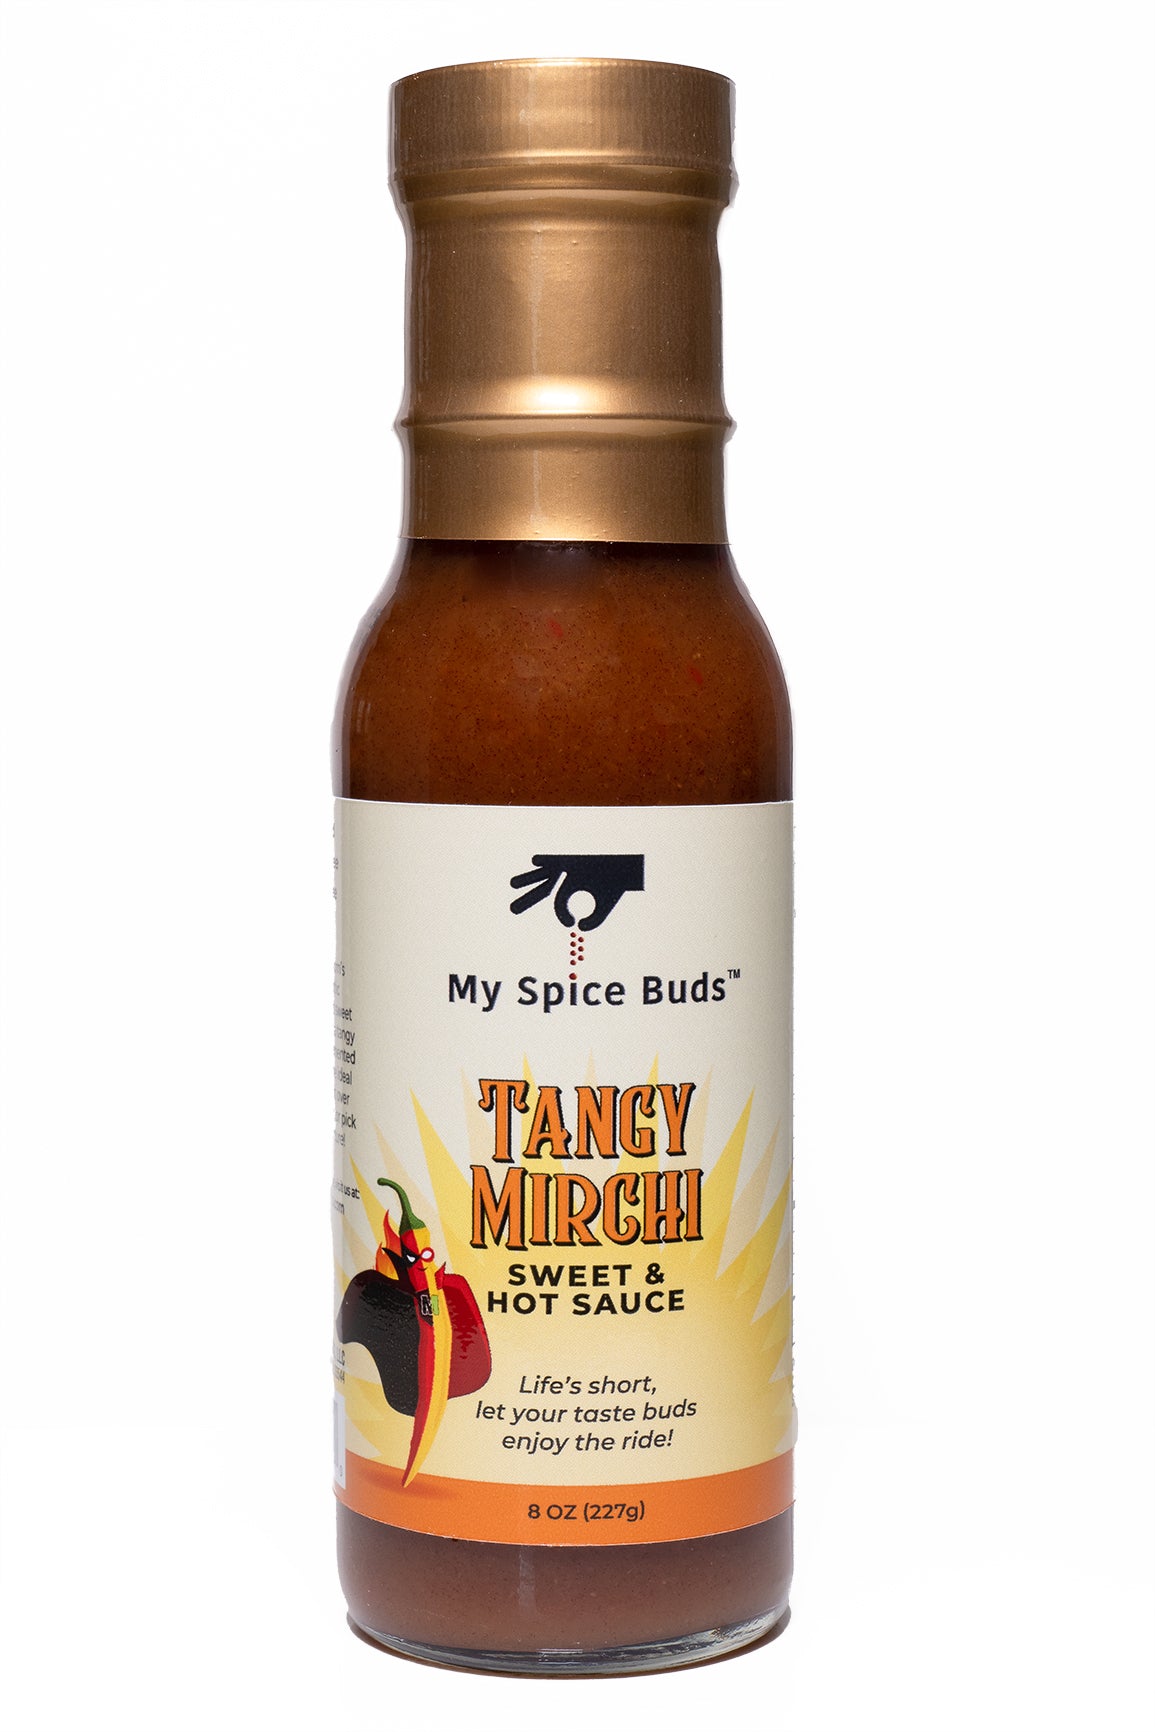 Tangy Mirchi Sweet & Hot Sauce